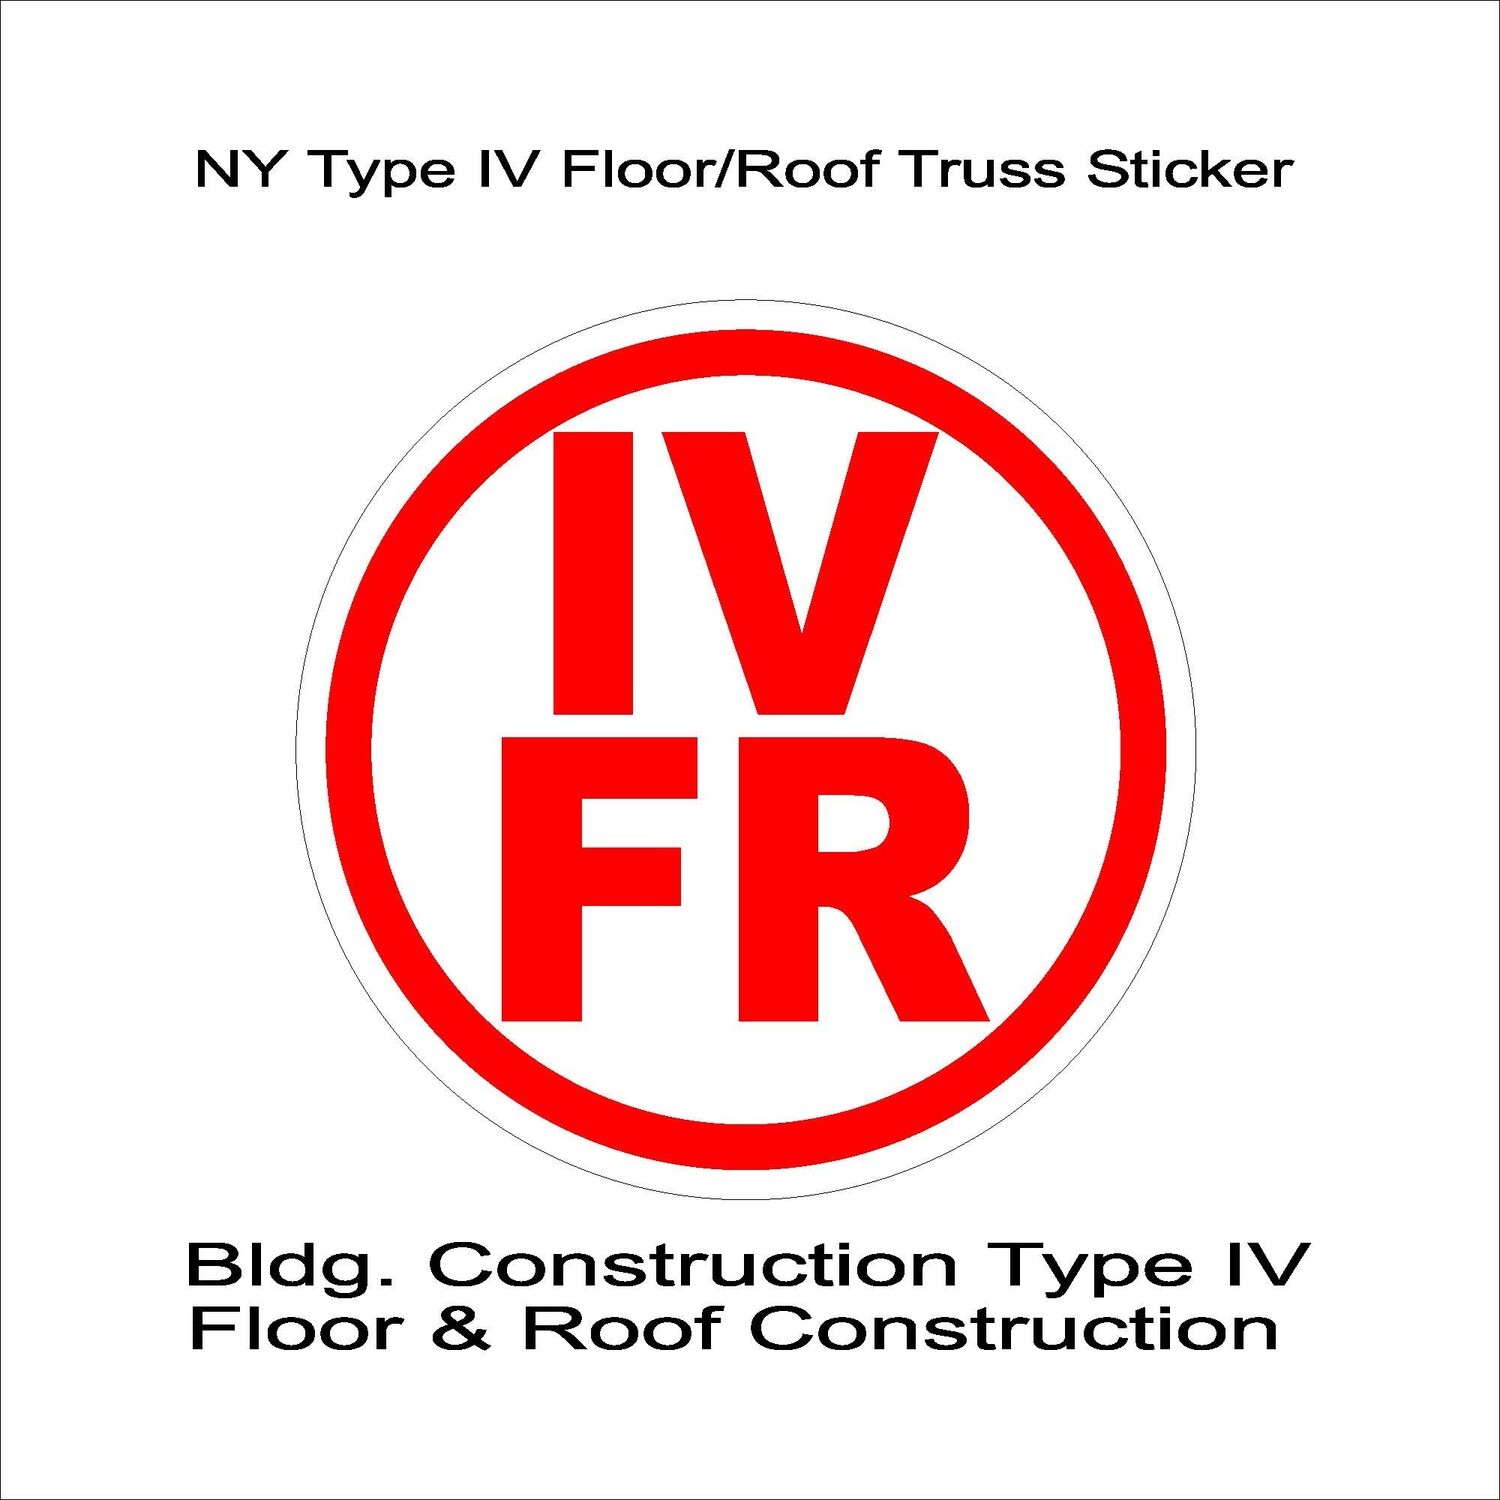 NY Type IV Floor/Roof Truss Sticker